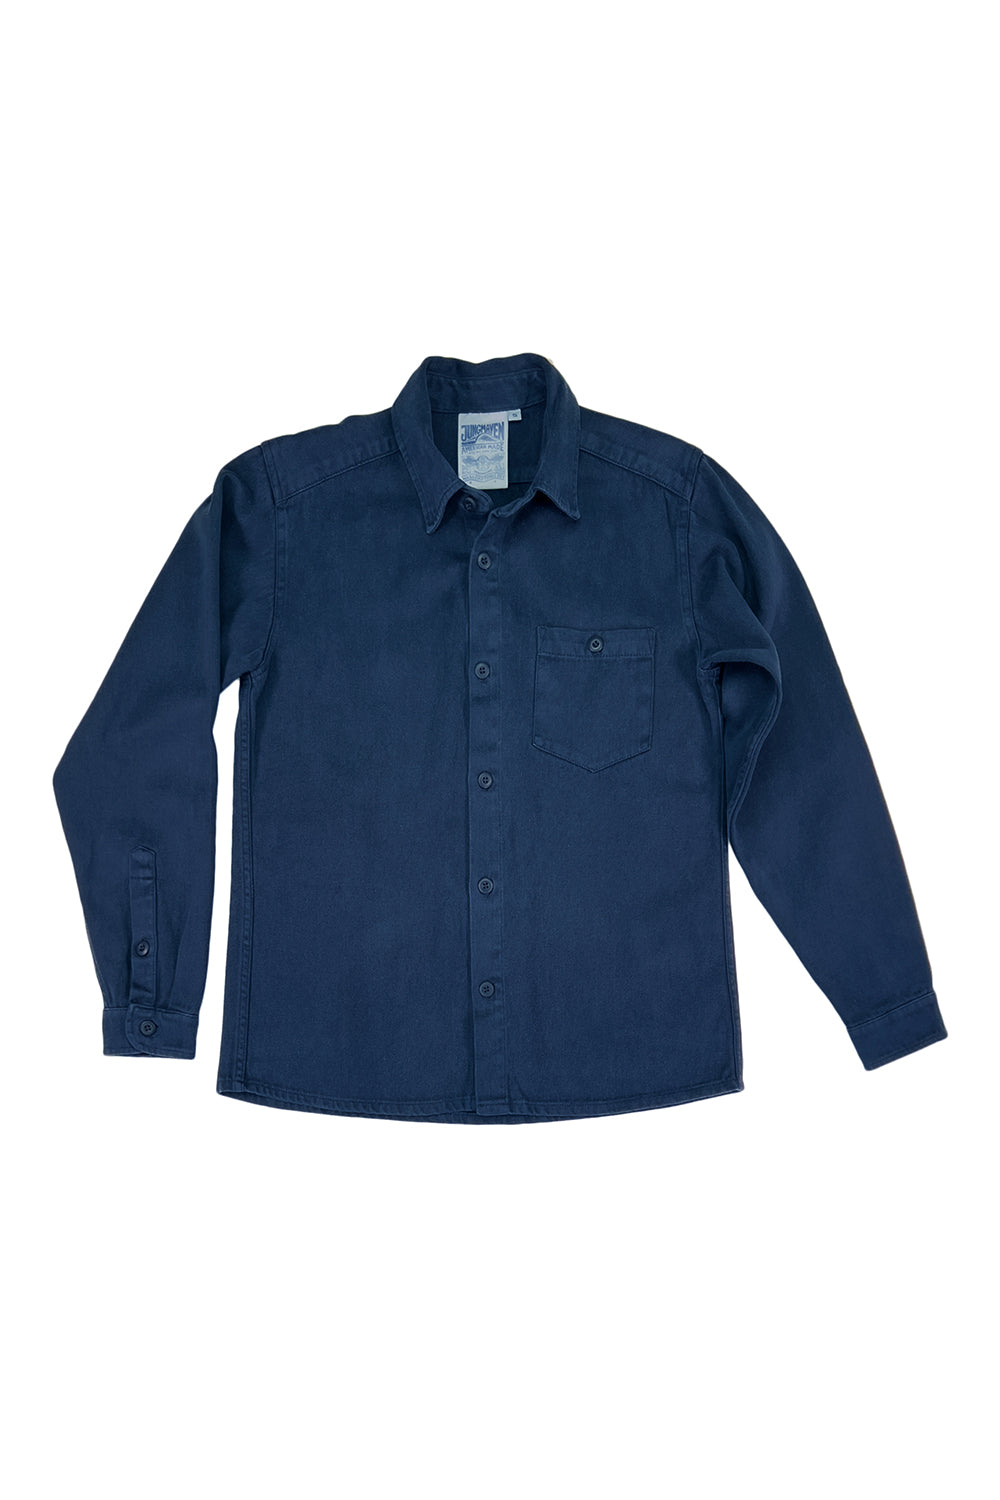 Topanga Shirt | Jungmaven Hemp Clothing & Accessories / Color: Navy